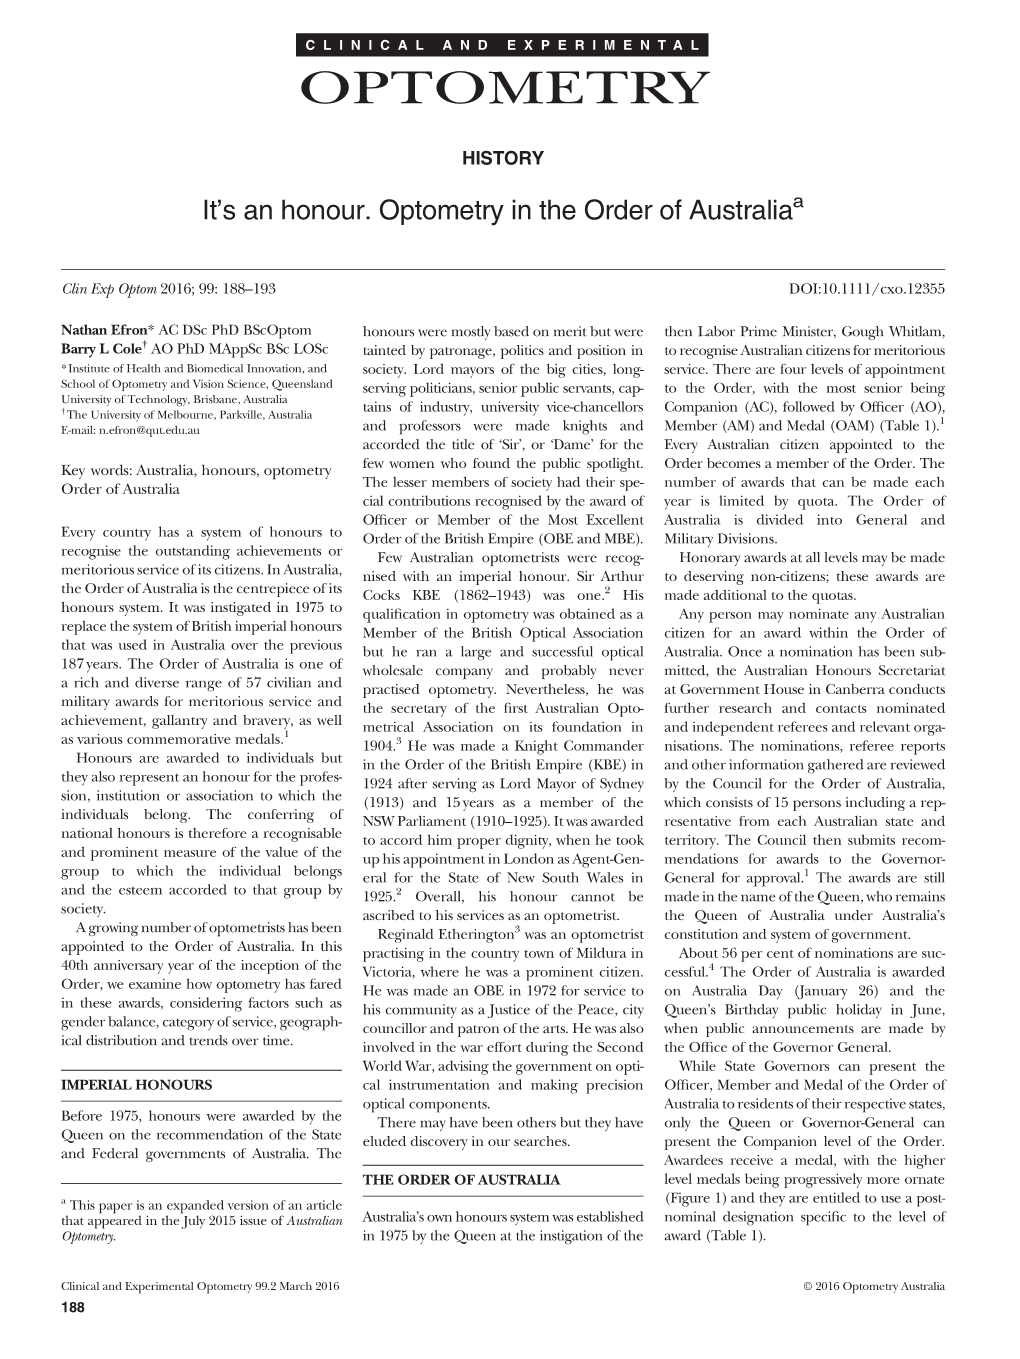 It's an Honour. Optometry in the Order of Australia